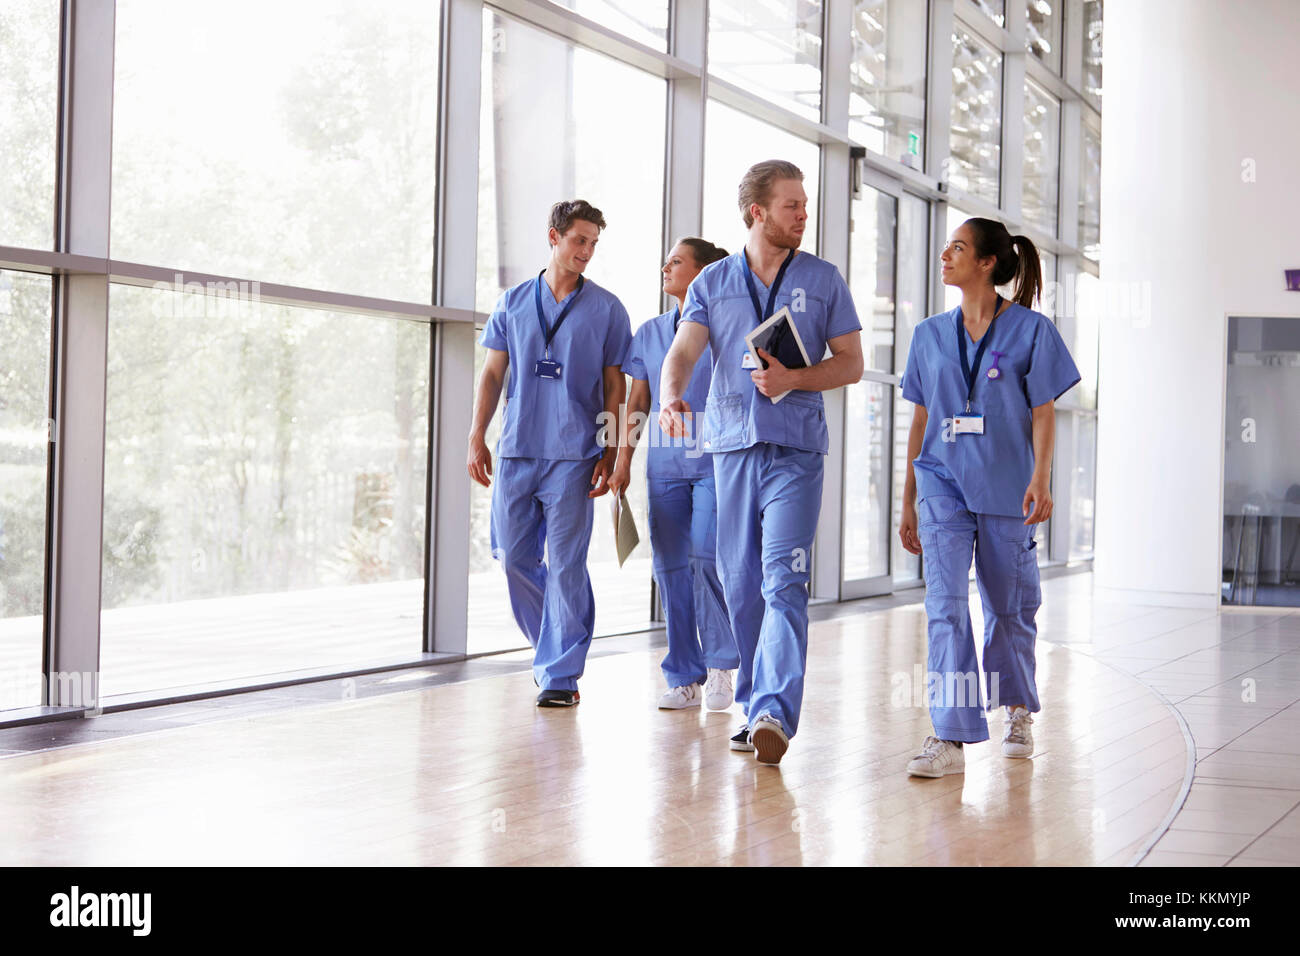 Four Healthcare Workers In Scrubs Walking In Corridor Stock Photo Alamy